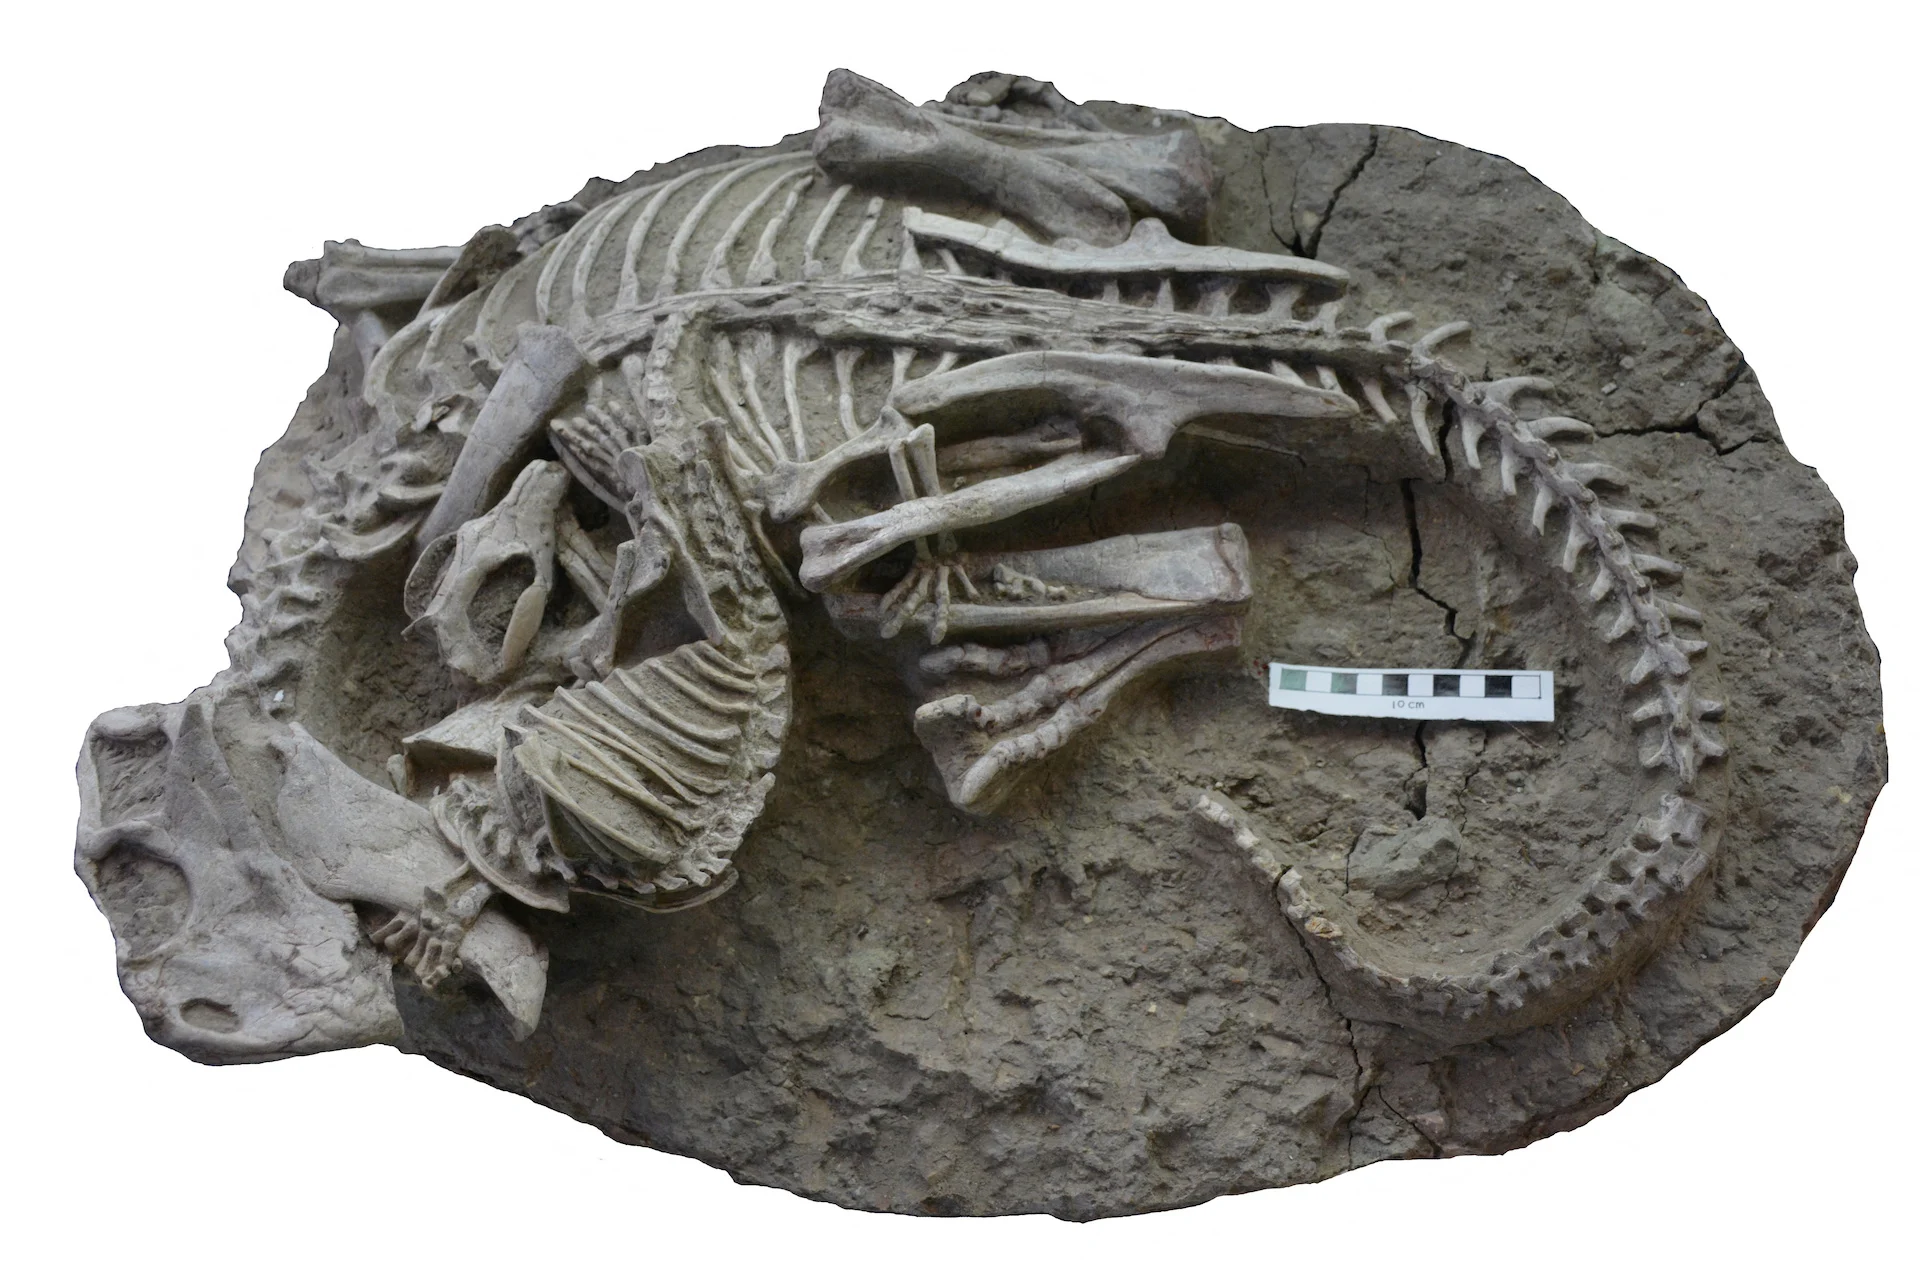 Dramatic fossil shows pugnacious mammal attacking a dinosaur